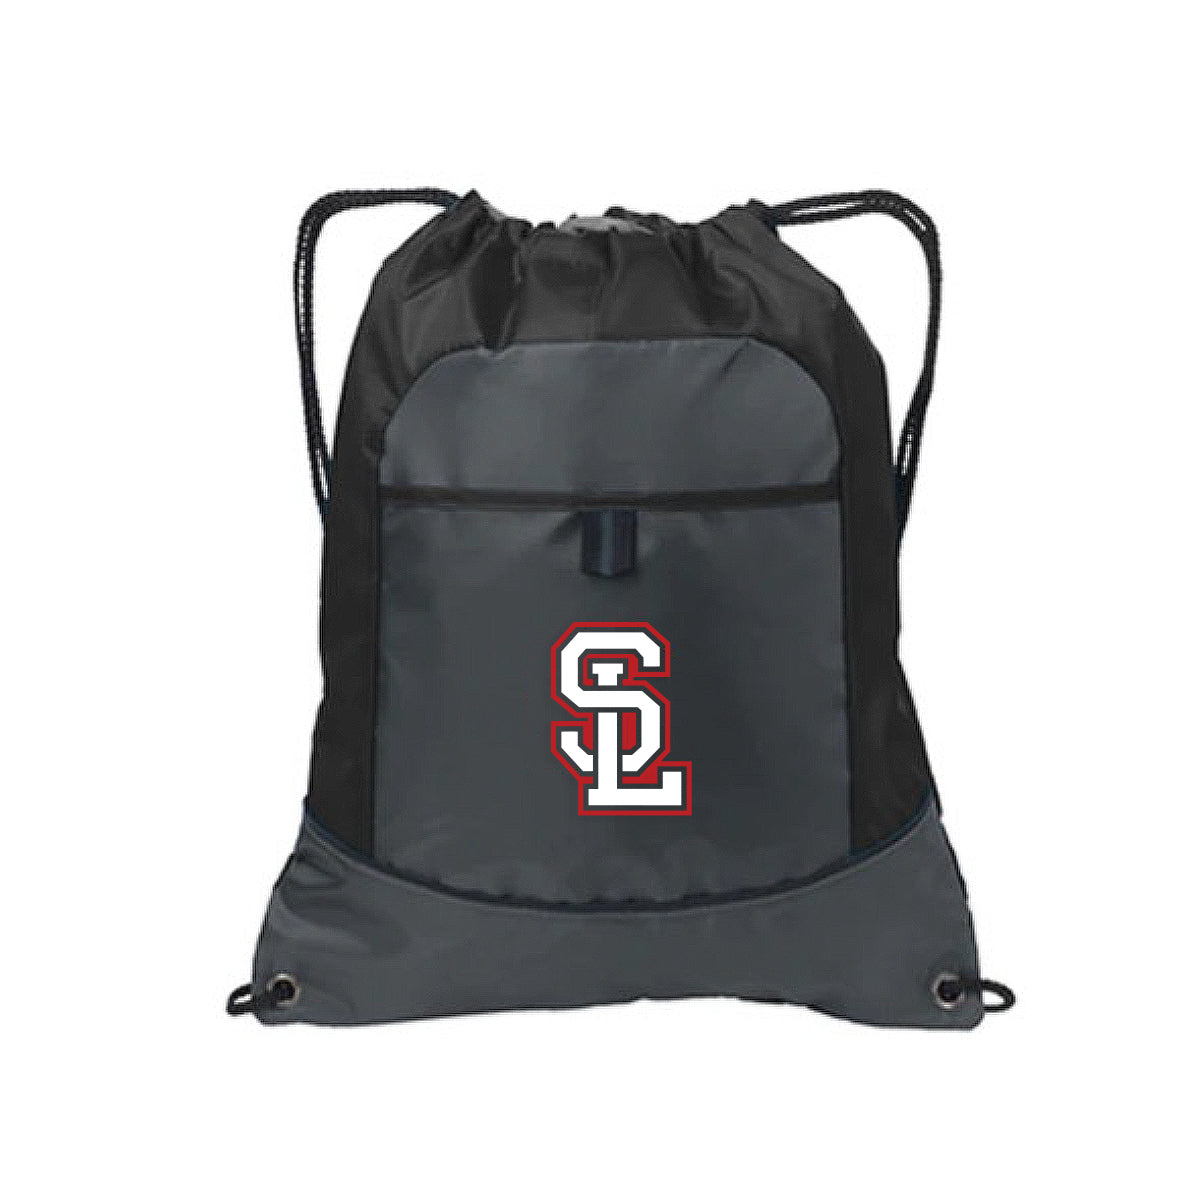 SL Middle School Drawstring Bag